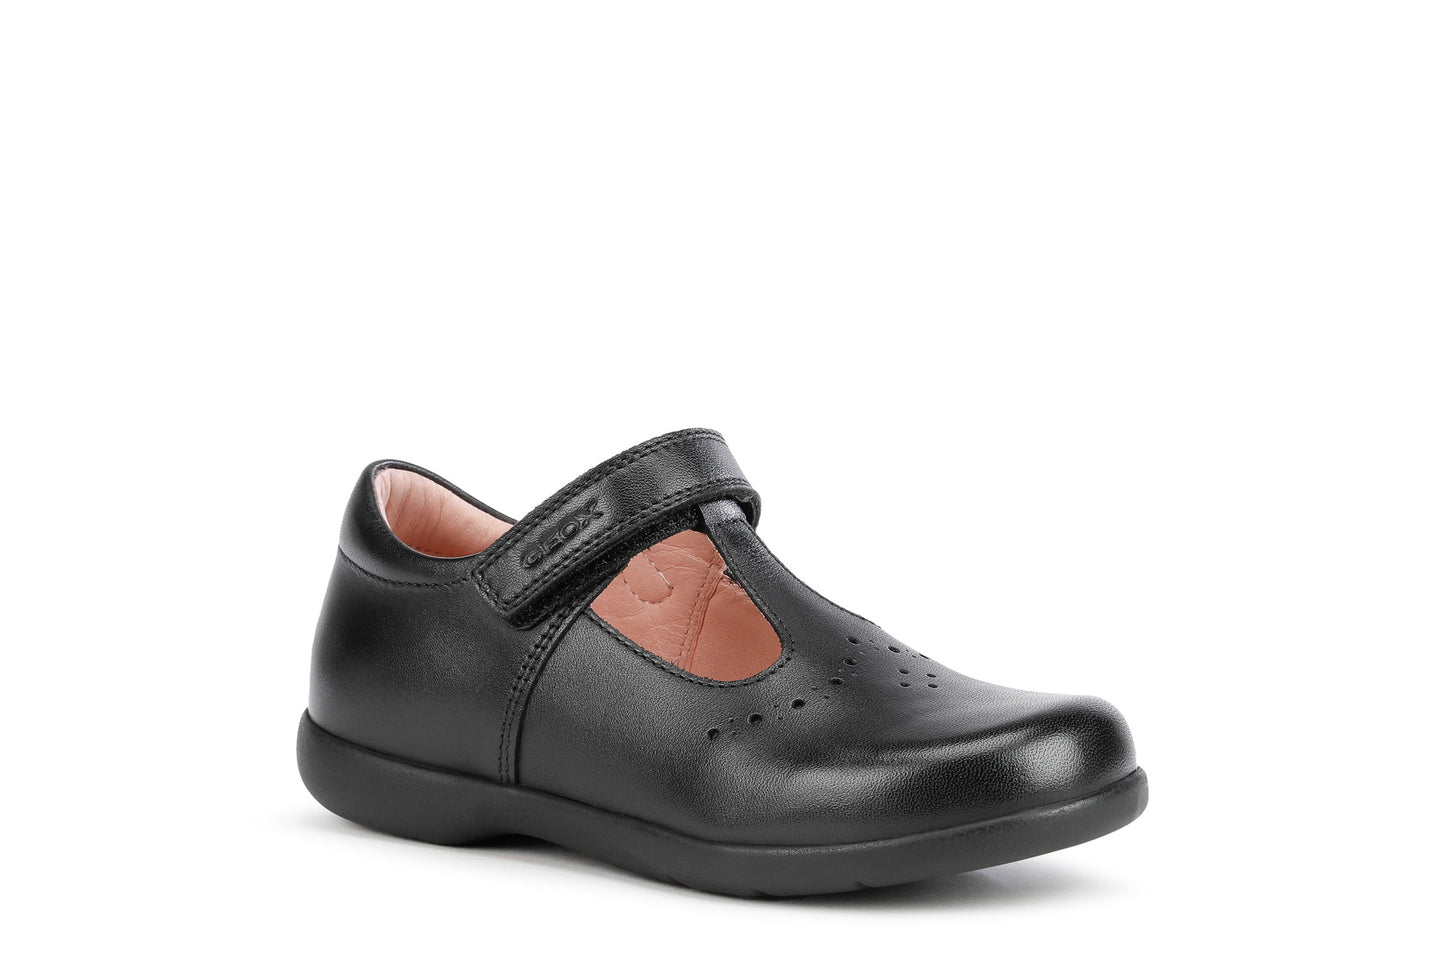 Naimara Black Leather T-Bar Girl's School Shoe